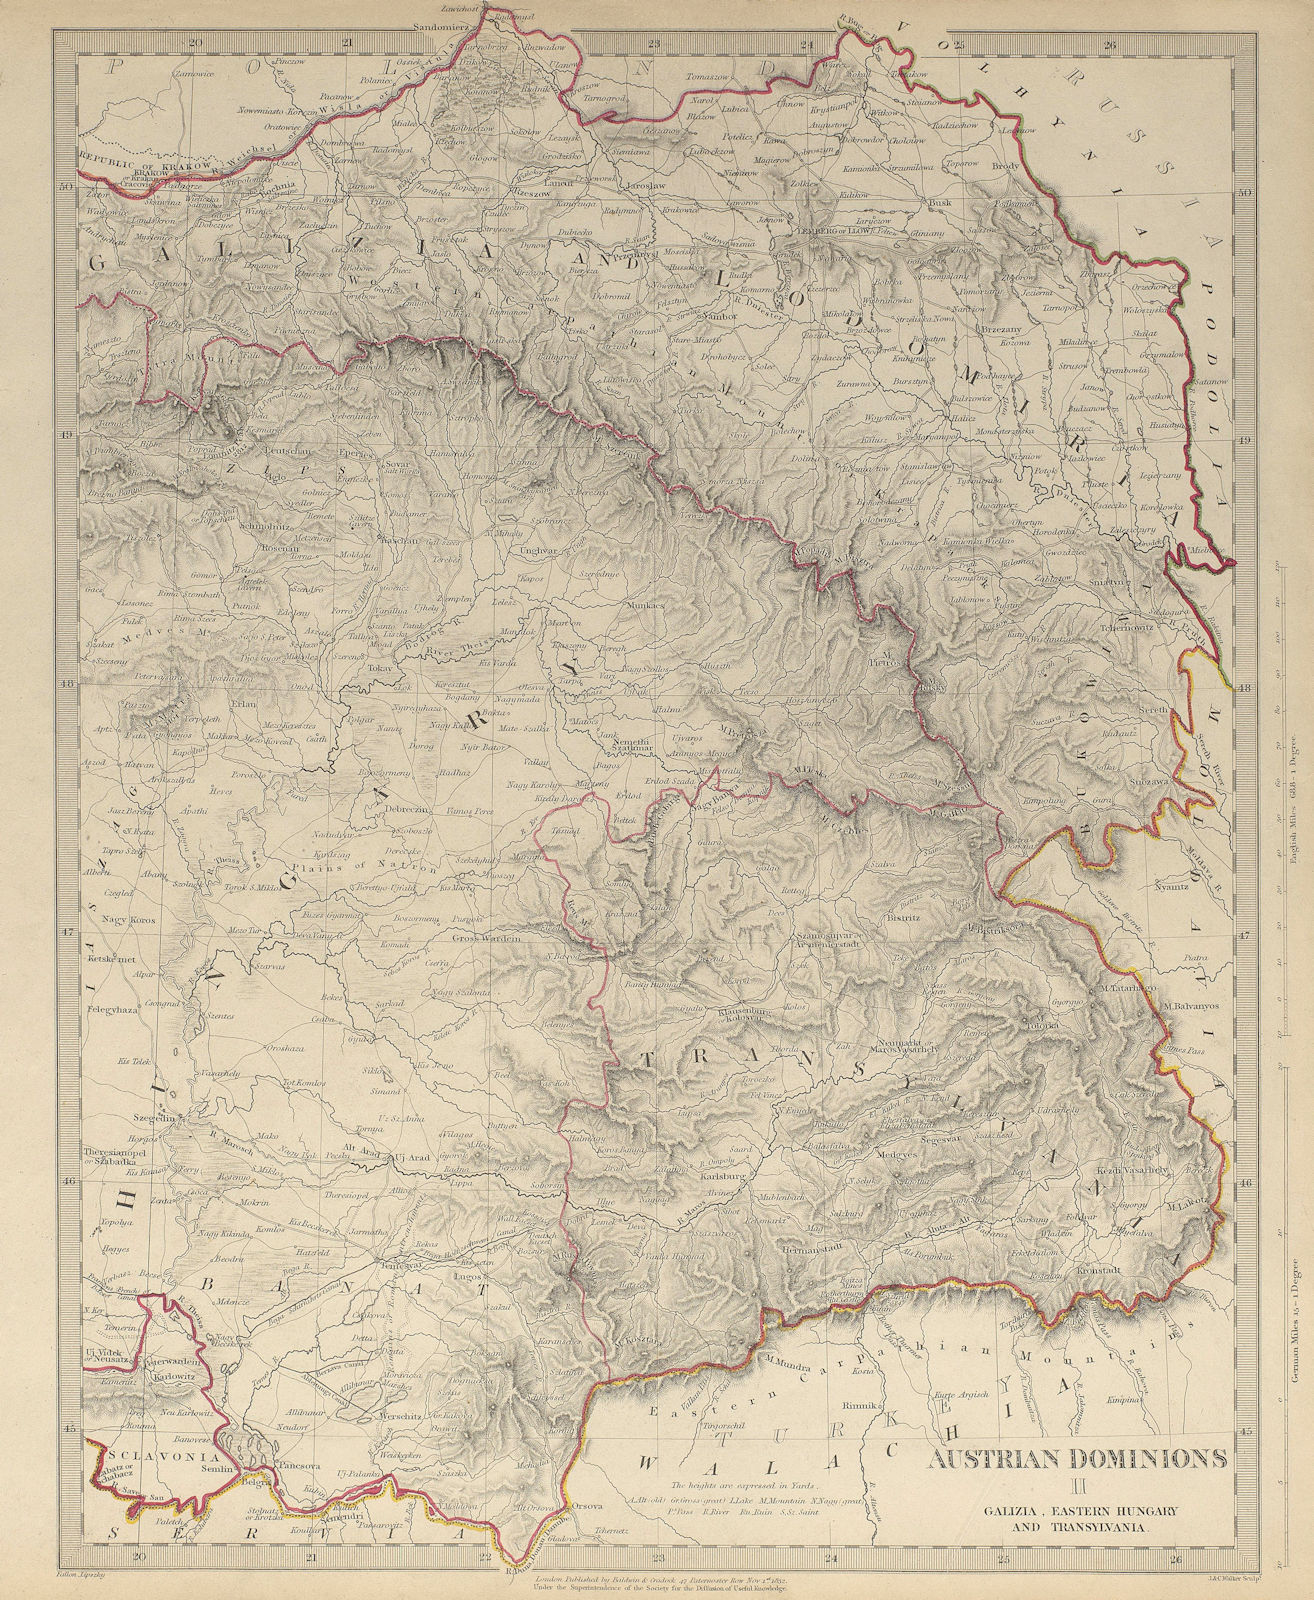 AUSTRIAN DOMINIONS.Galizia Eastern Hungary Transylvania Galicia.SDUK 1844 map